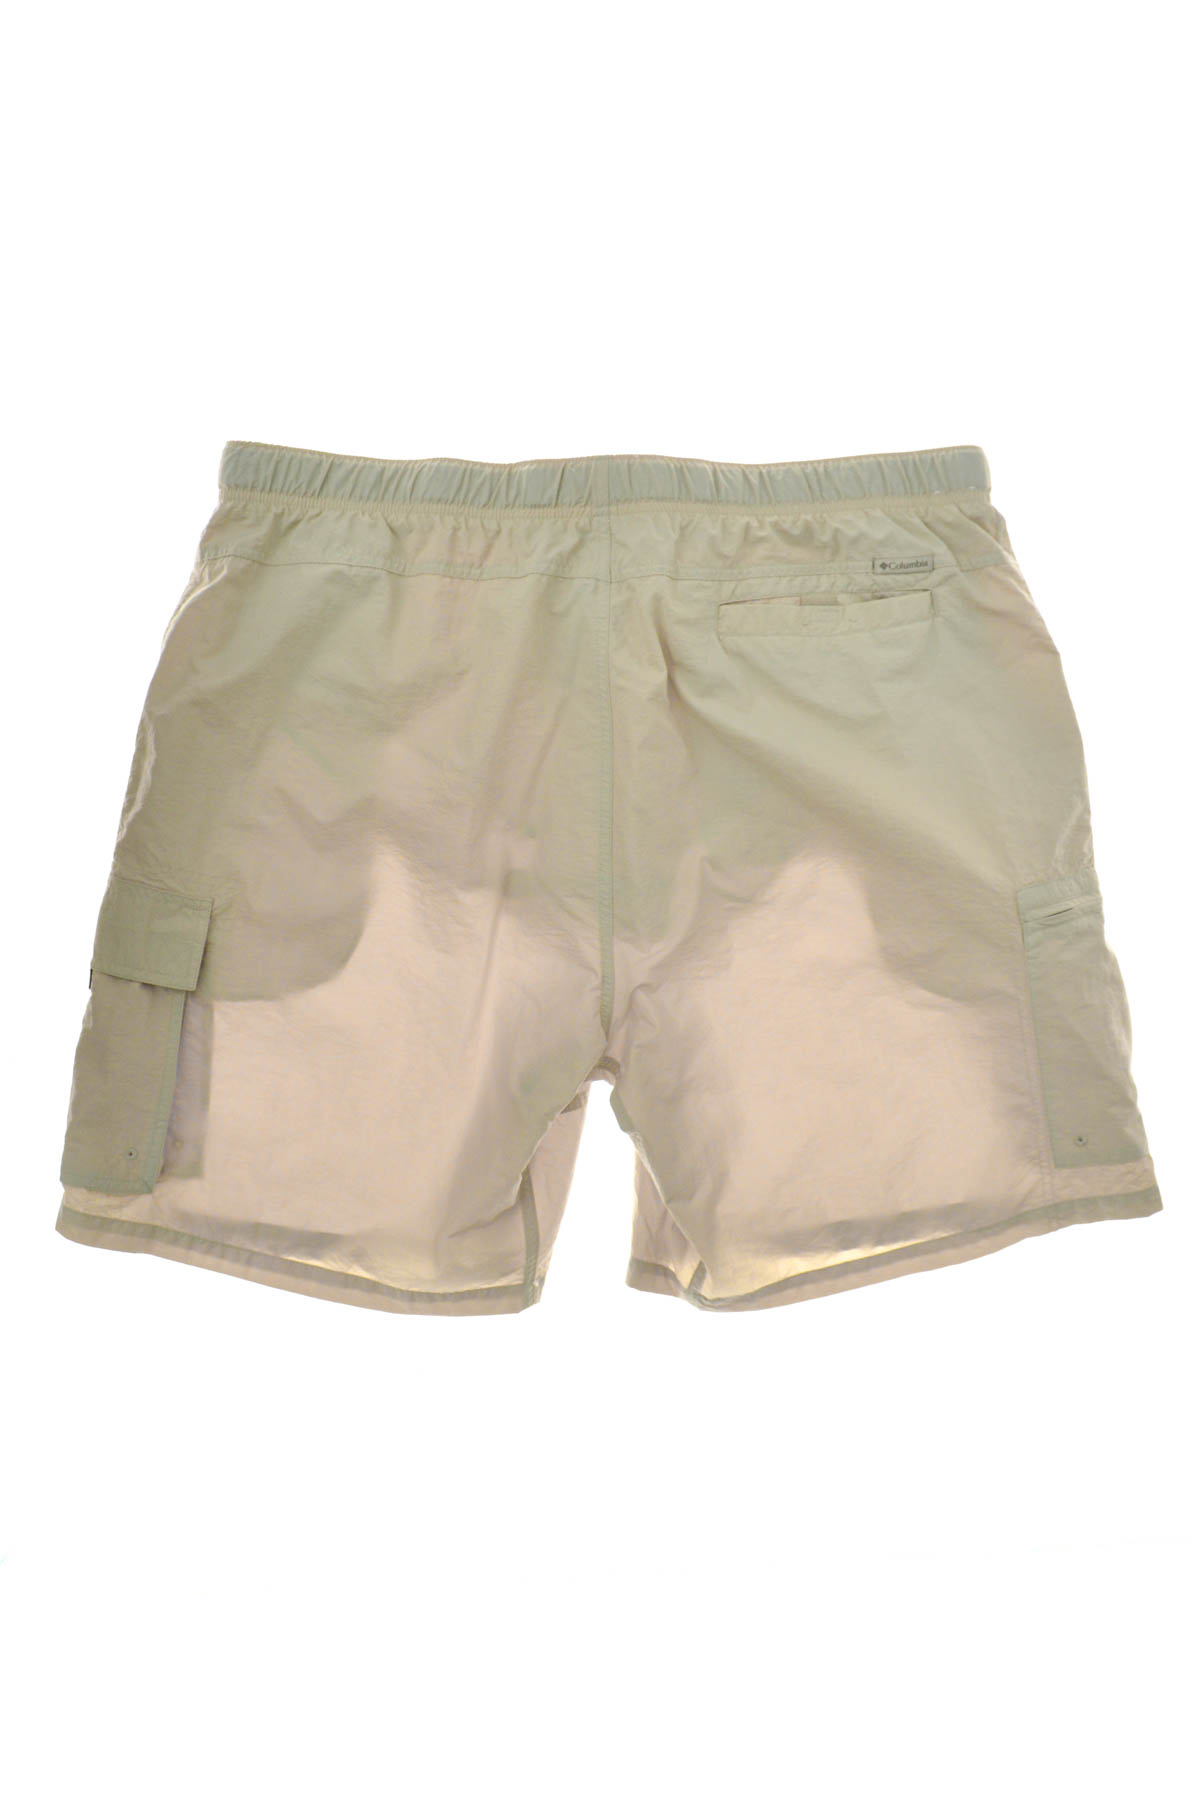 Men's shorts - Columbia - 1